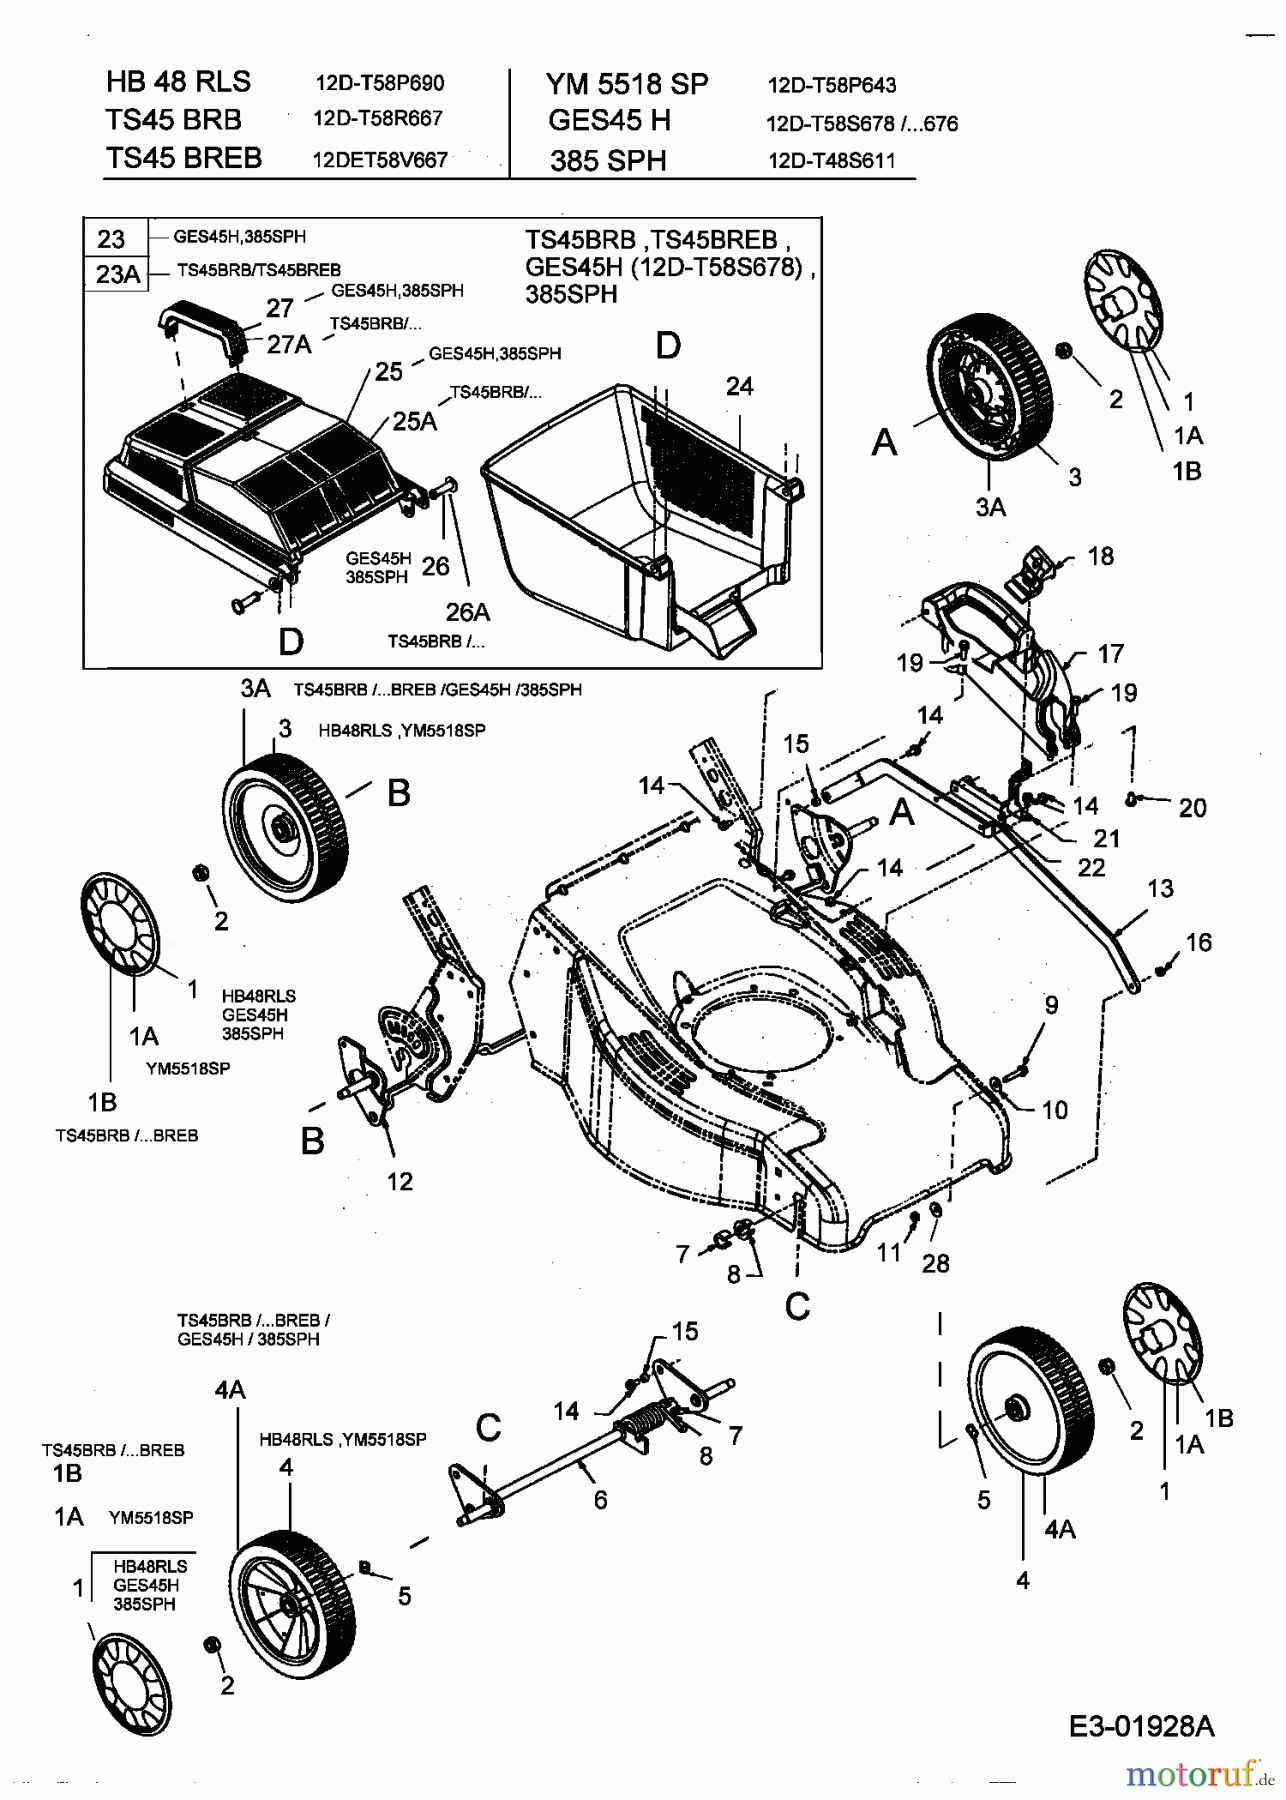  MTD Petrol mower self propelled GES 45 H 12D-T58S678  (2004) Grass box, Wheels, Cutting hight adjustment